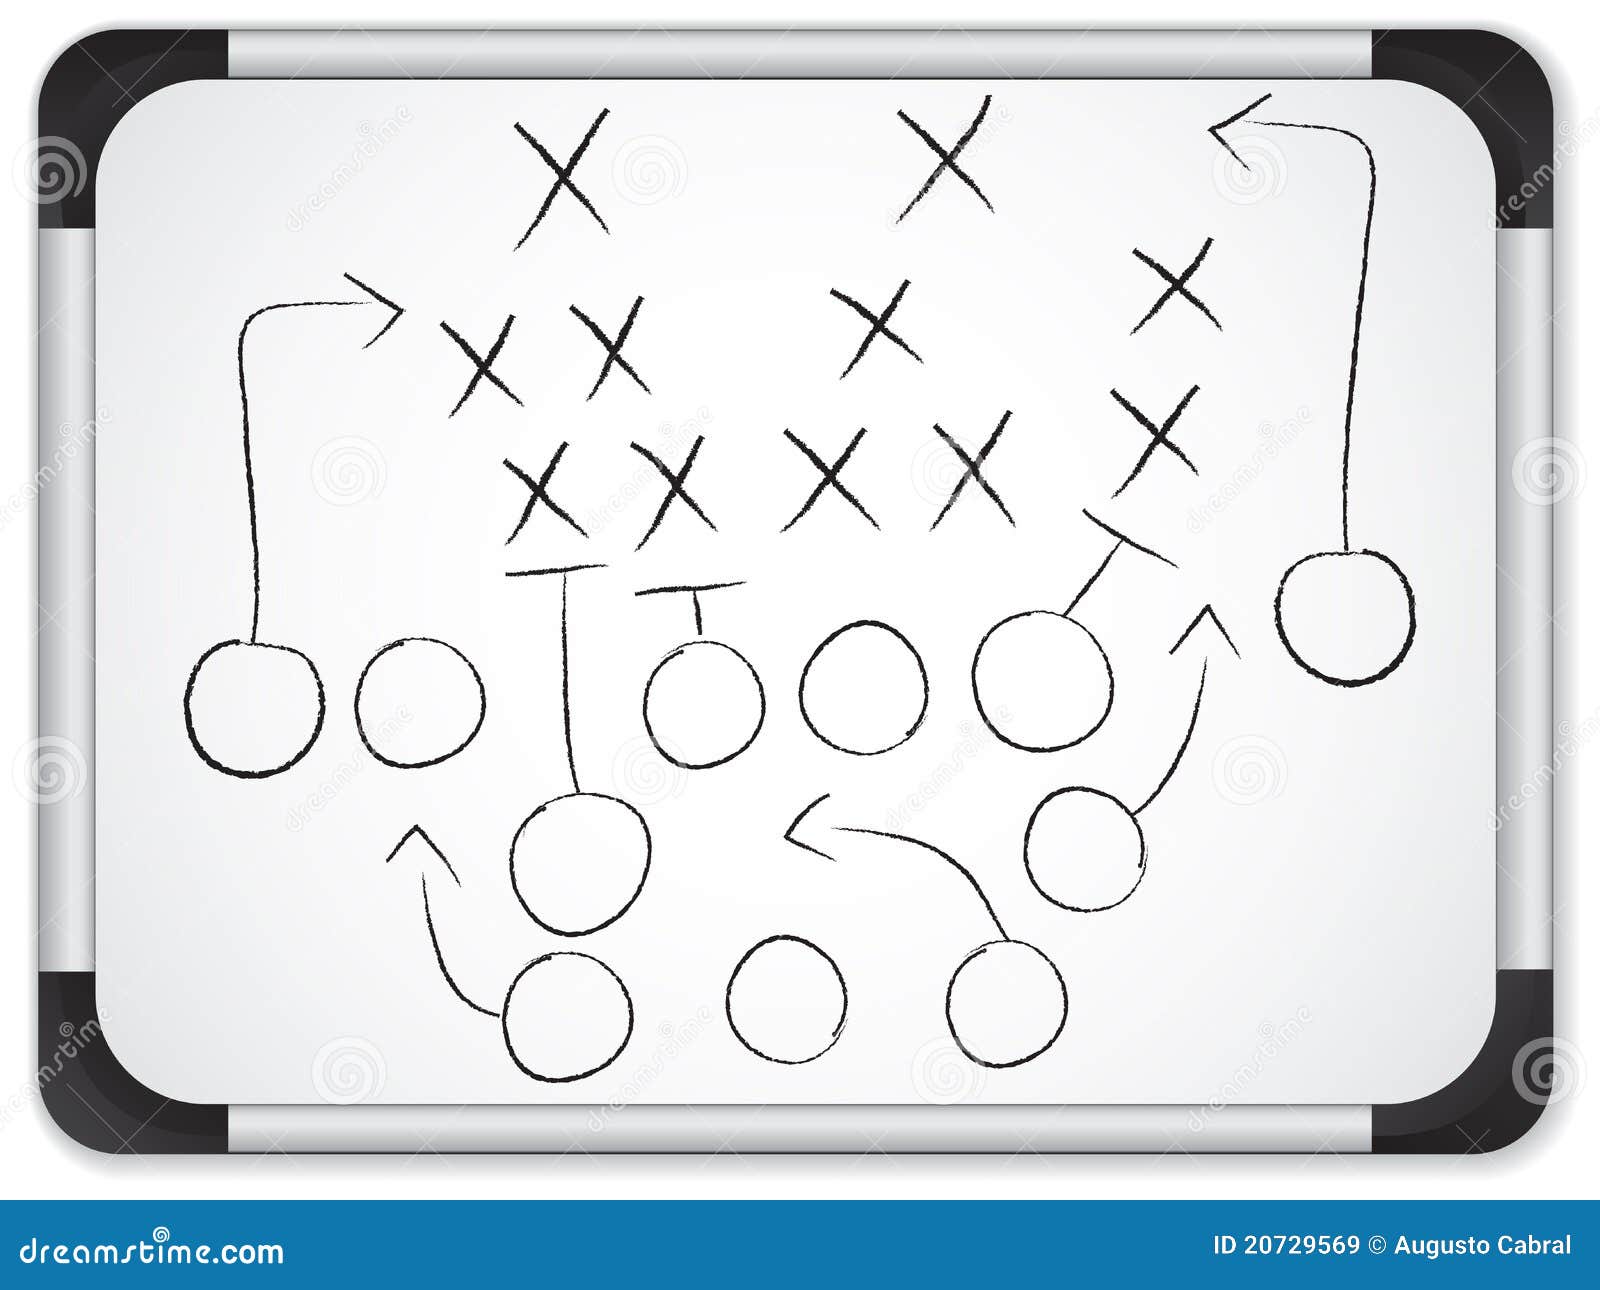 teamwork football game plan whiteboard 20729569